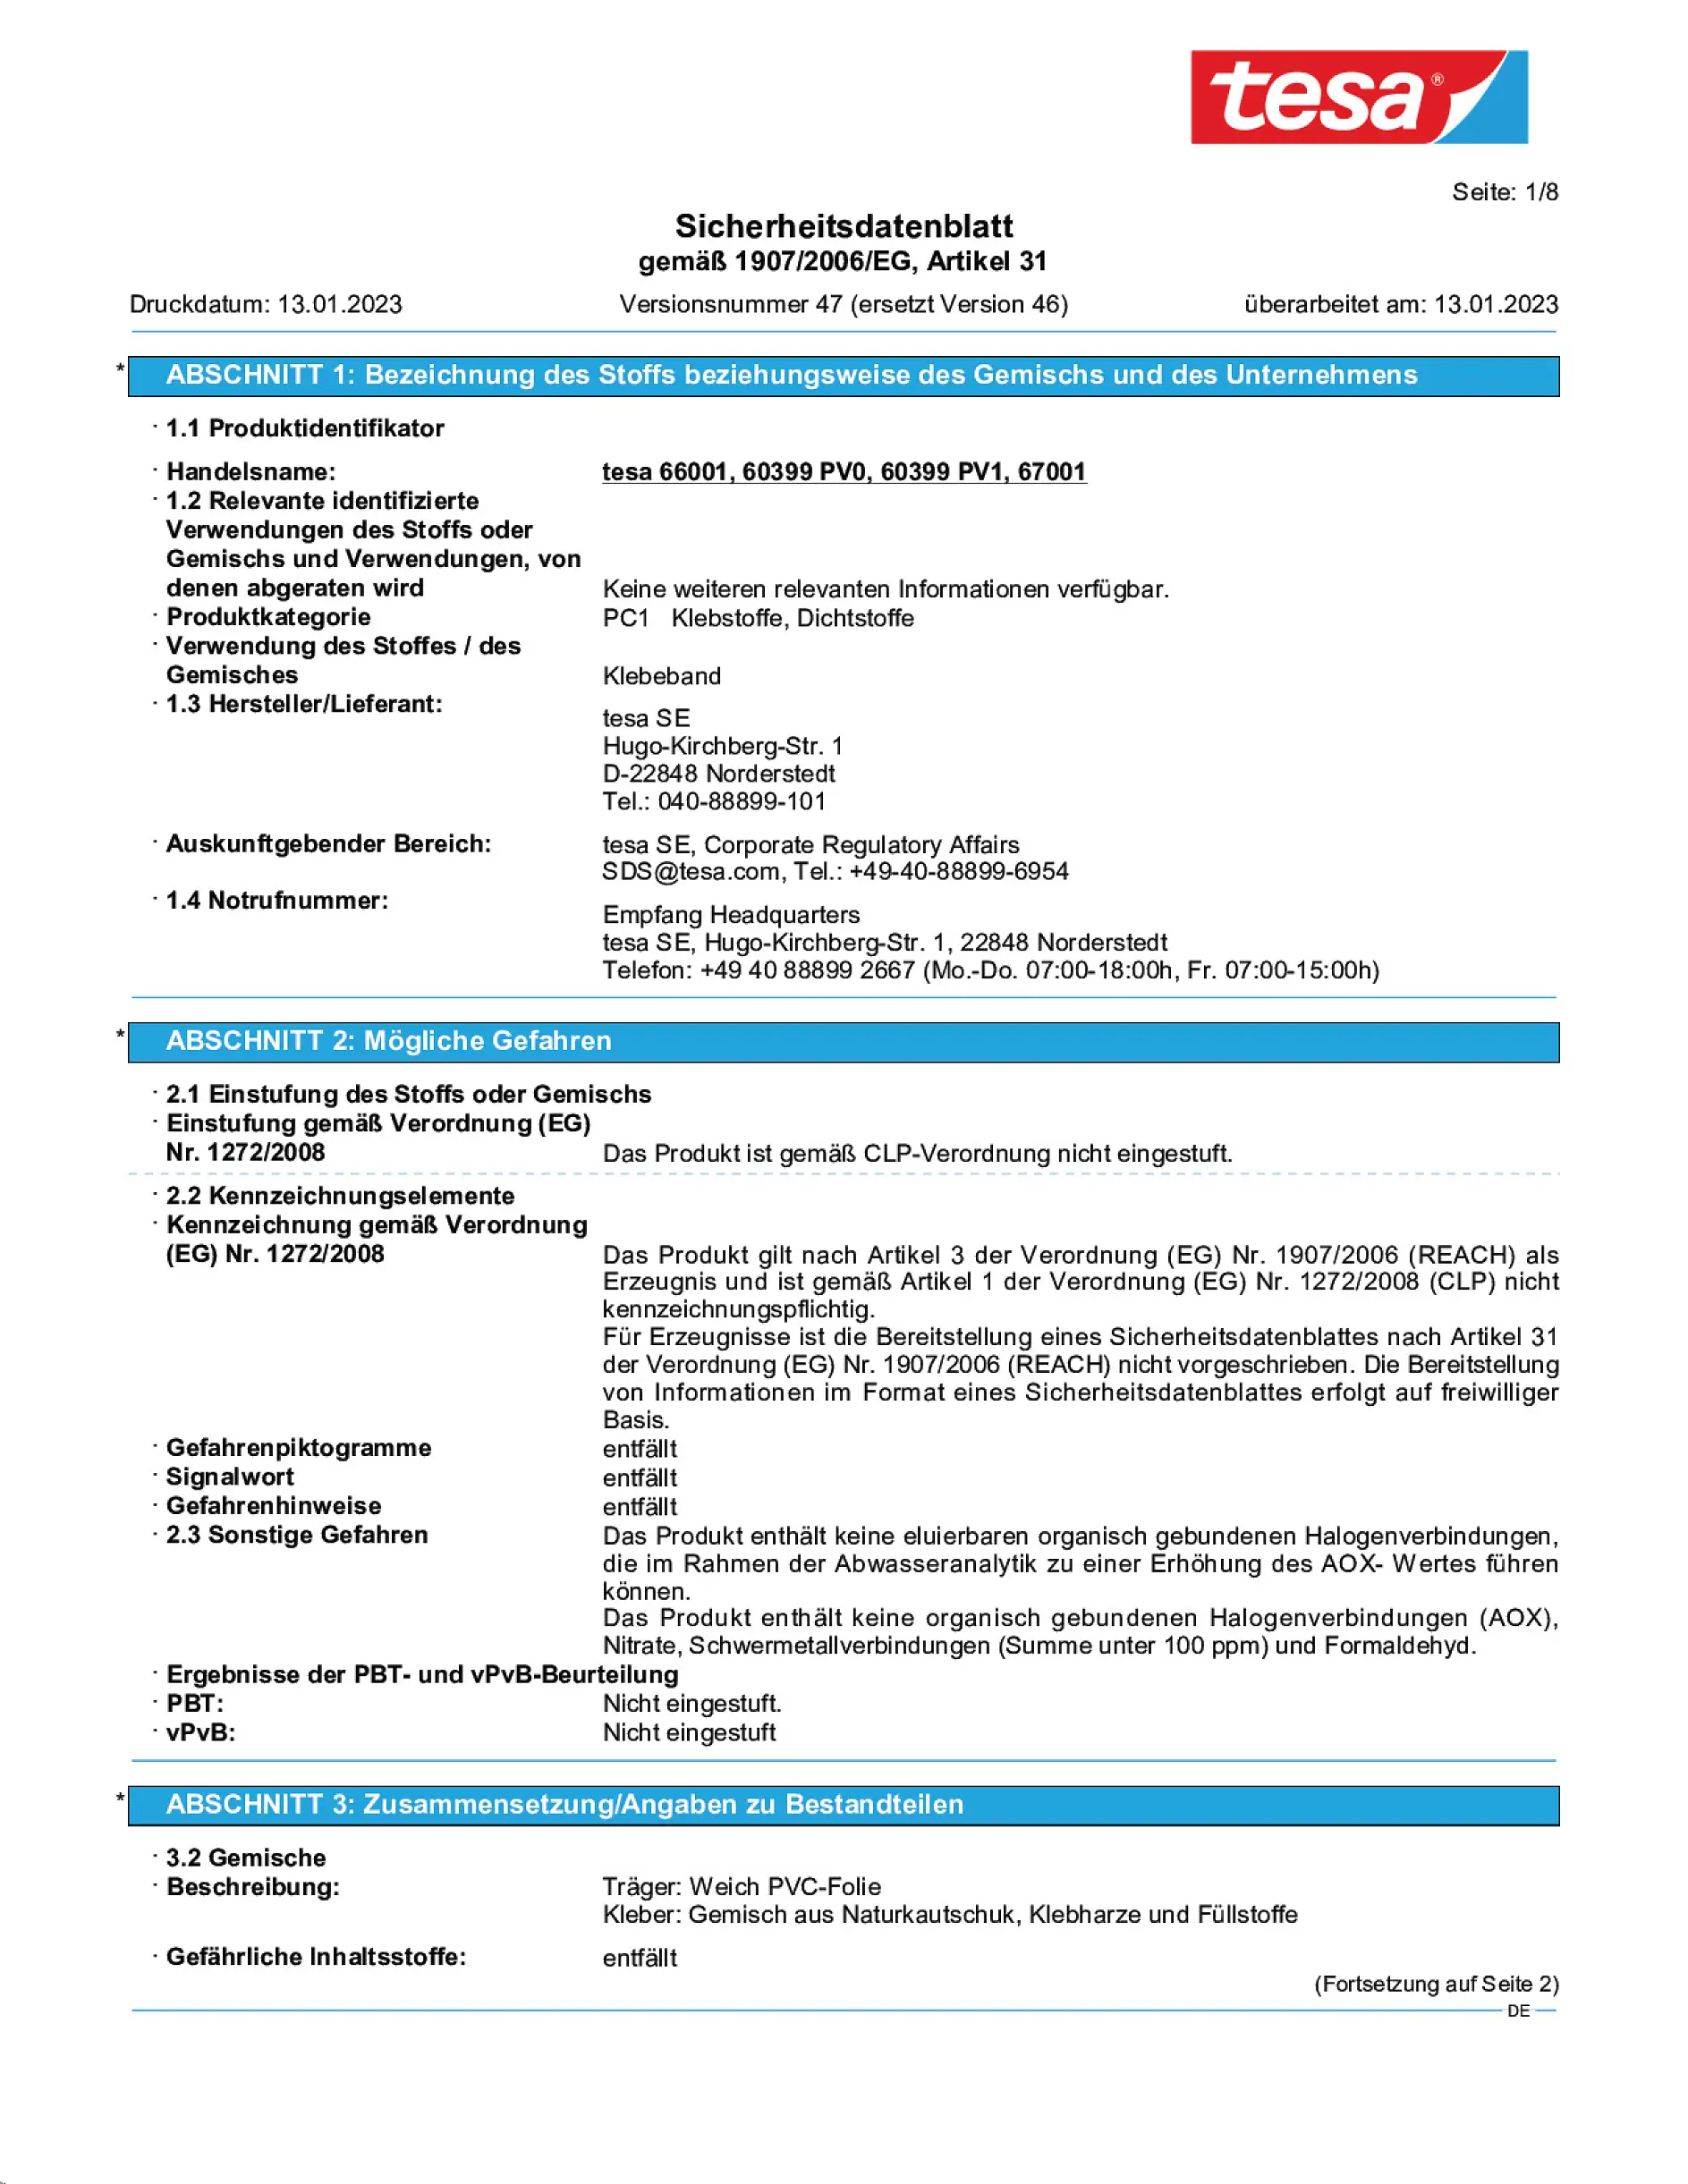 Safety data sheet_tesa® Professional 66001_de-DE_v47